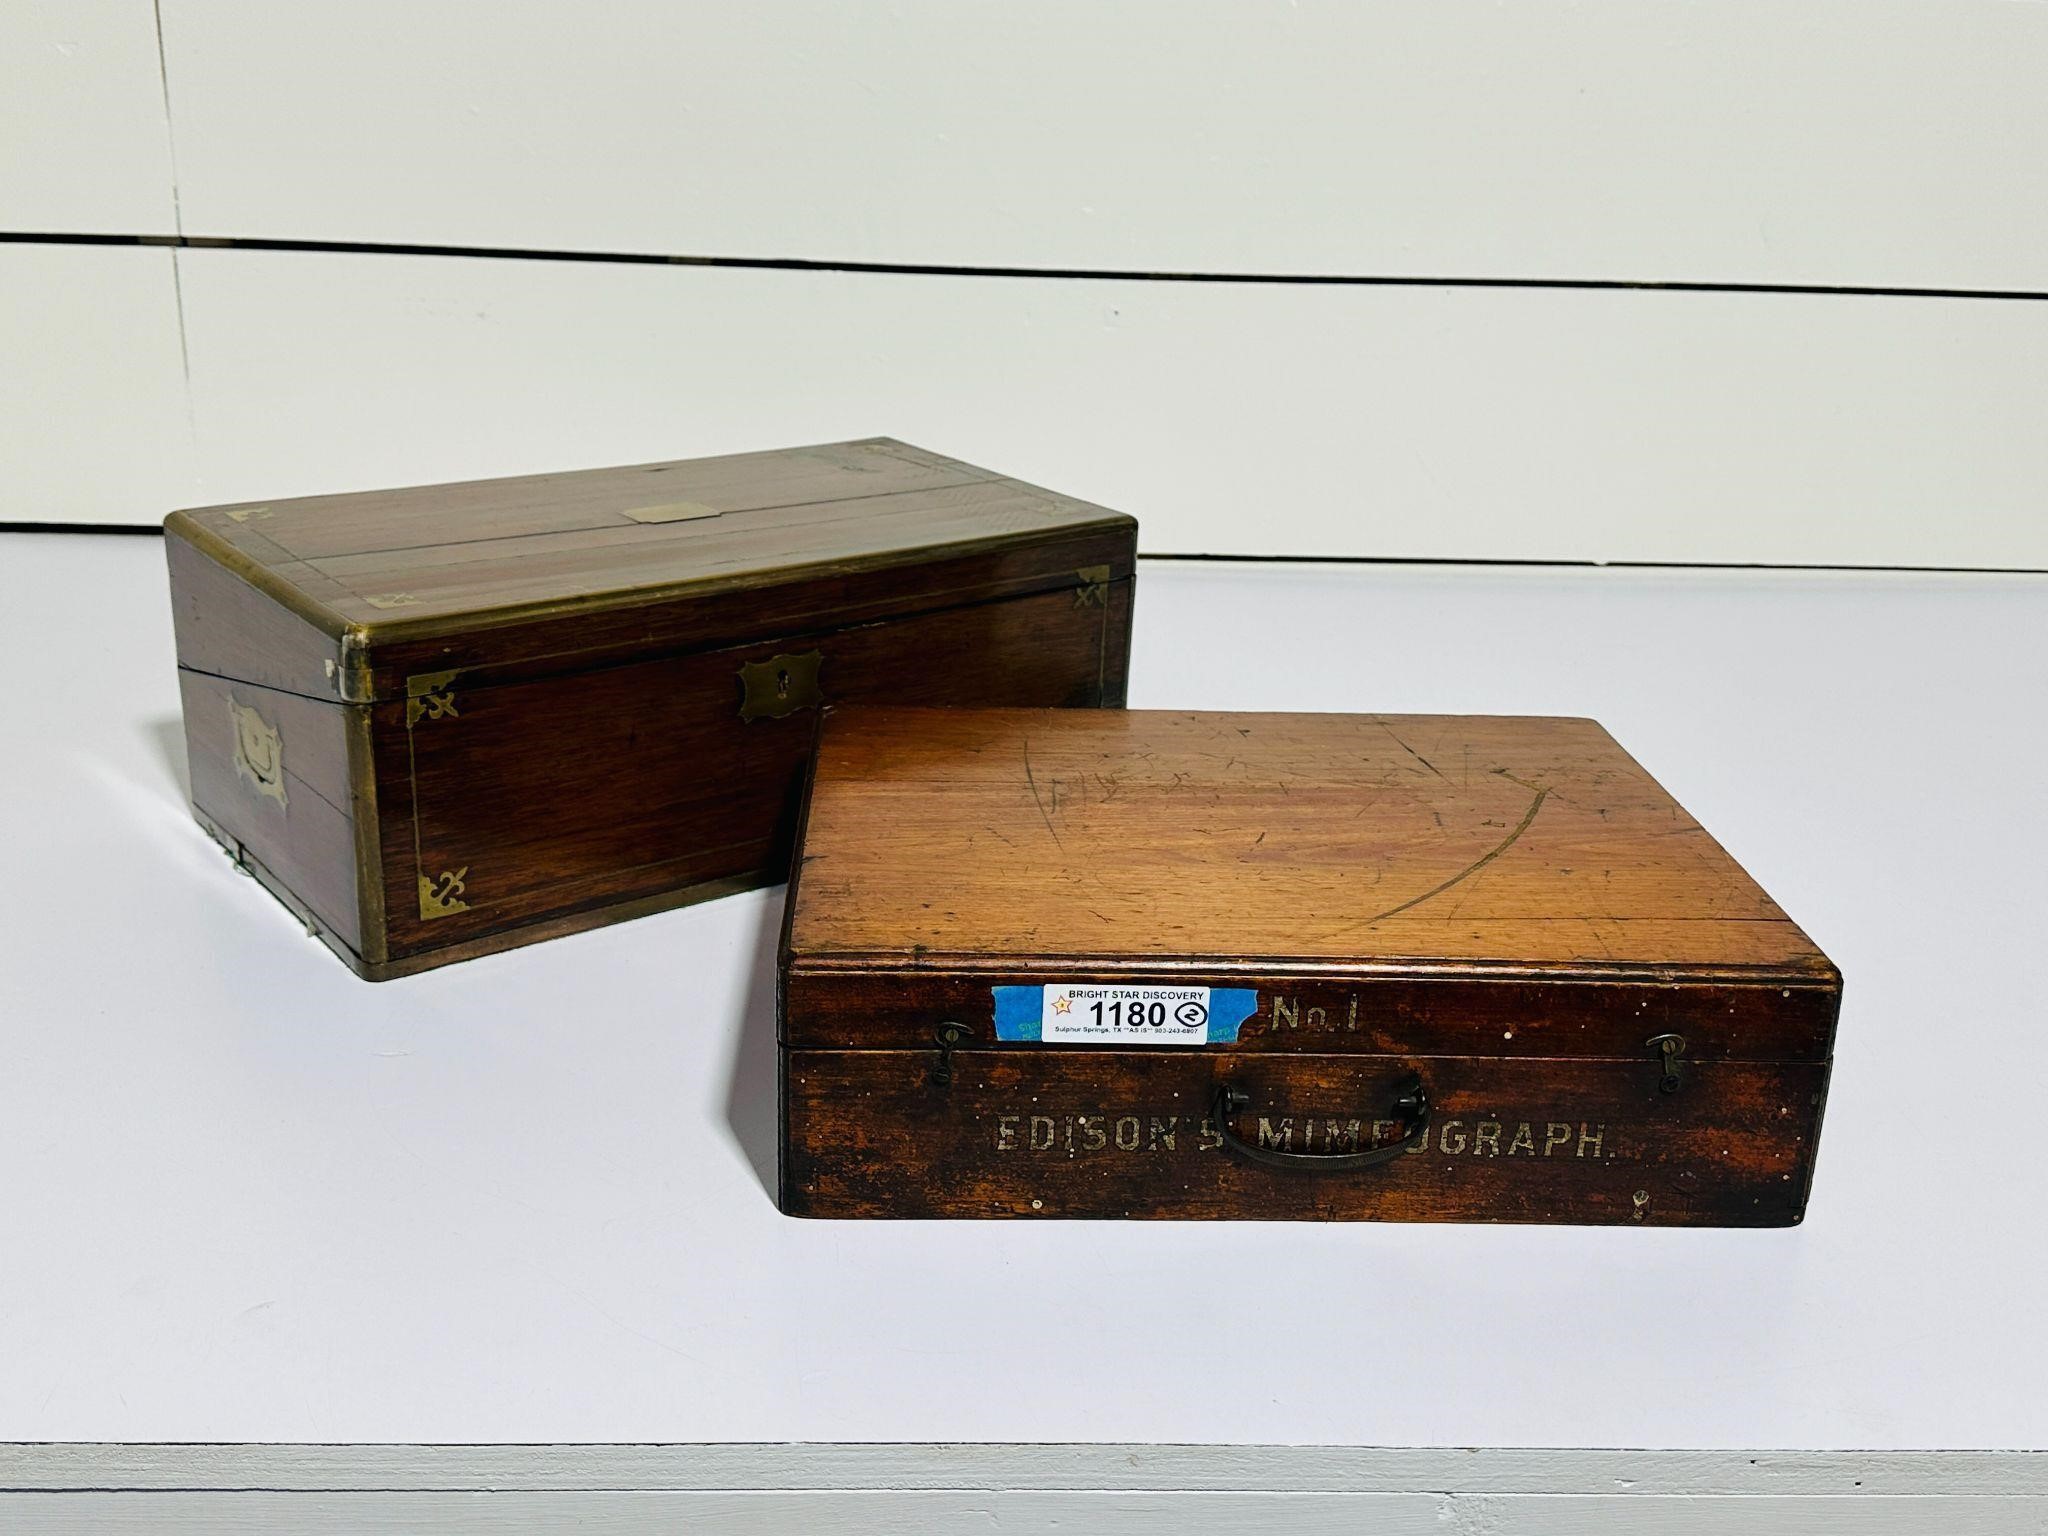 Edison's Mimeograph & Portable Writing Desk